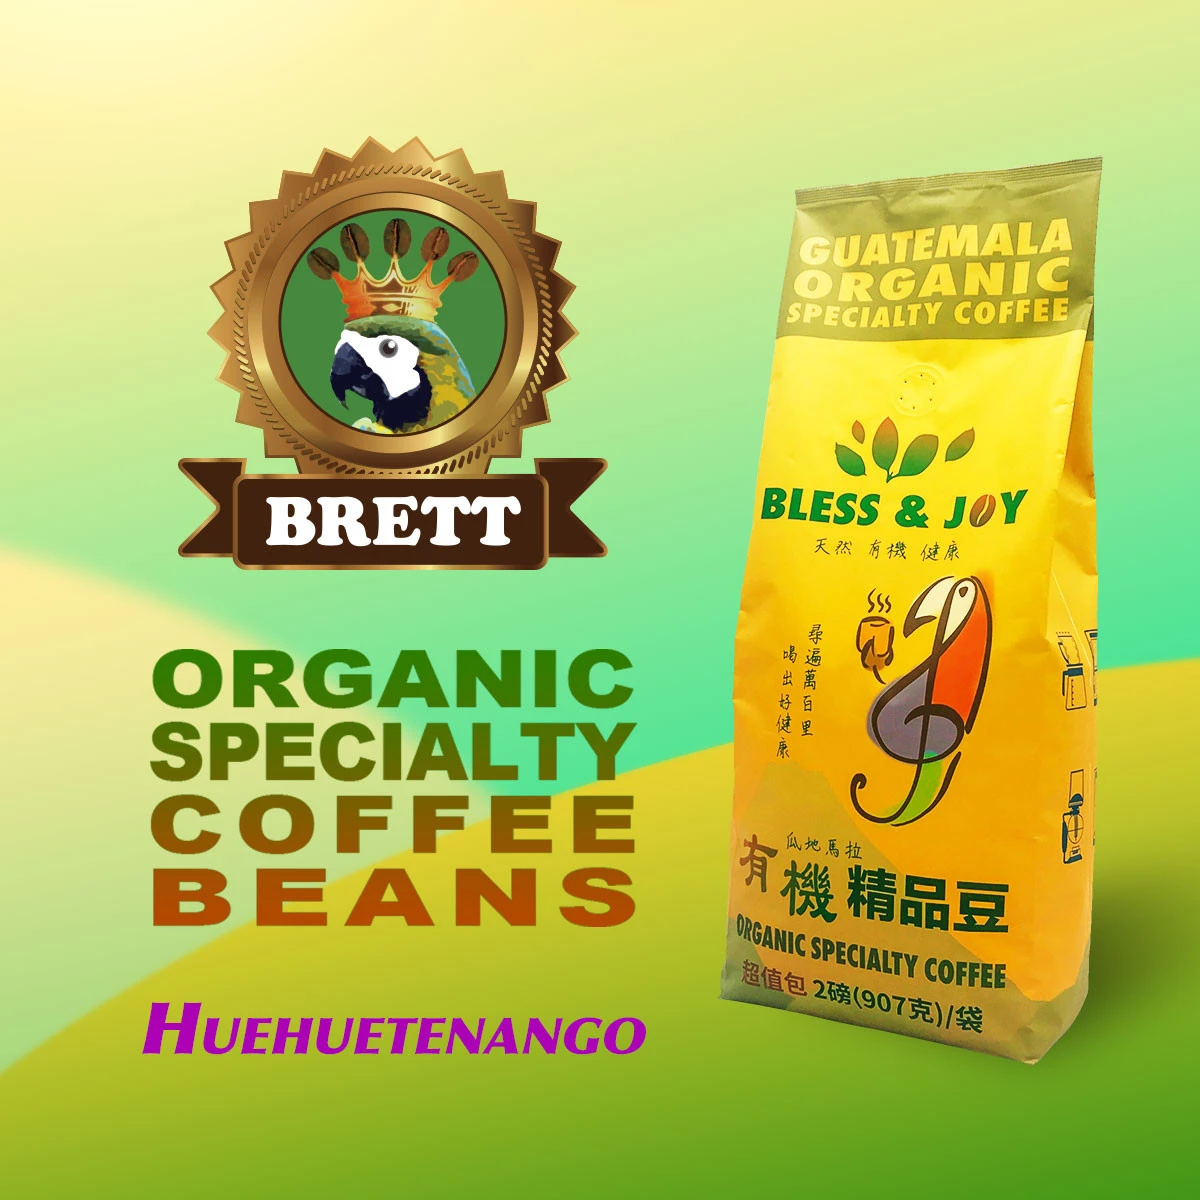 Bless & Joy Organic Roasted Coffee Beans Guatemala Huehuetenango Specialty Coffee Drink 907g